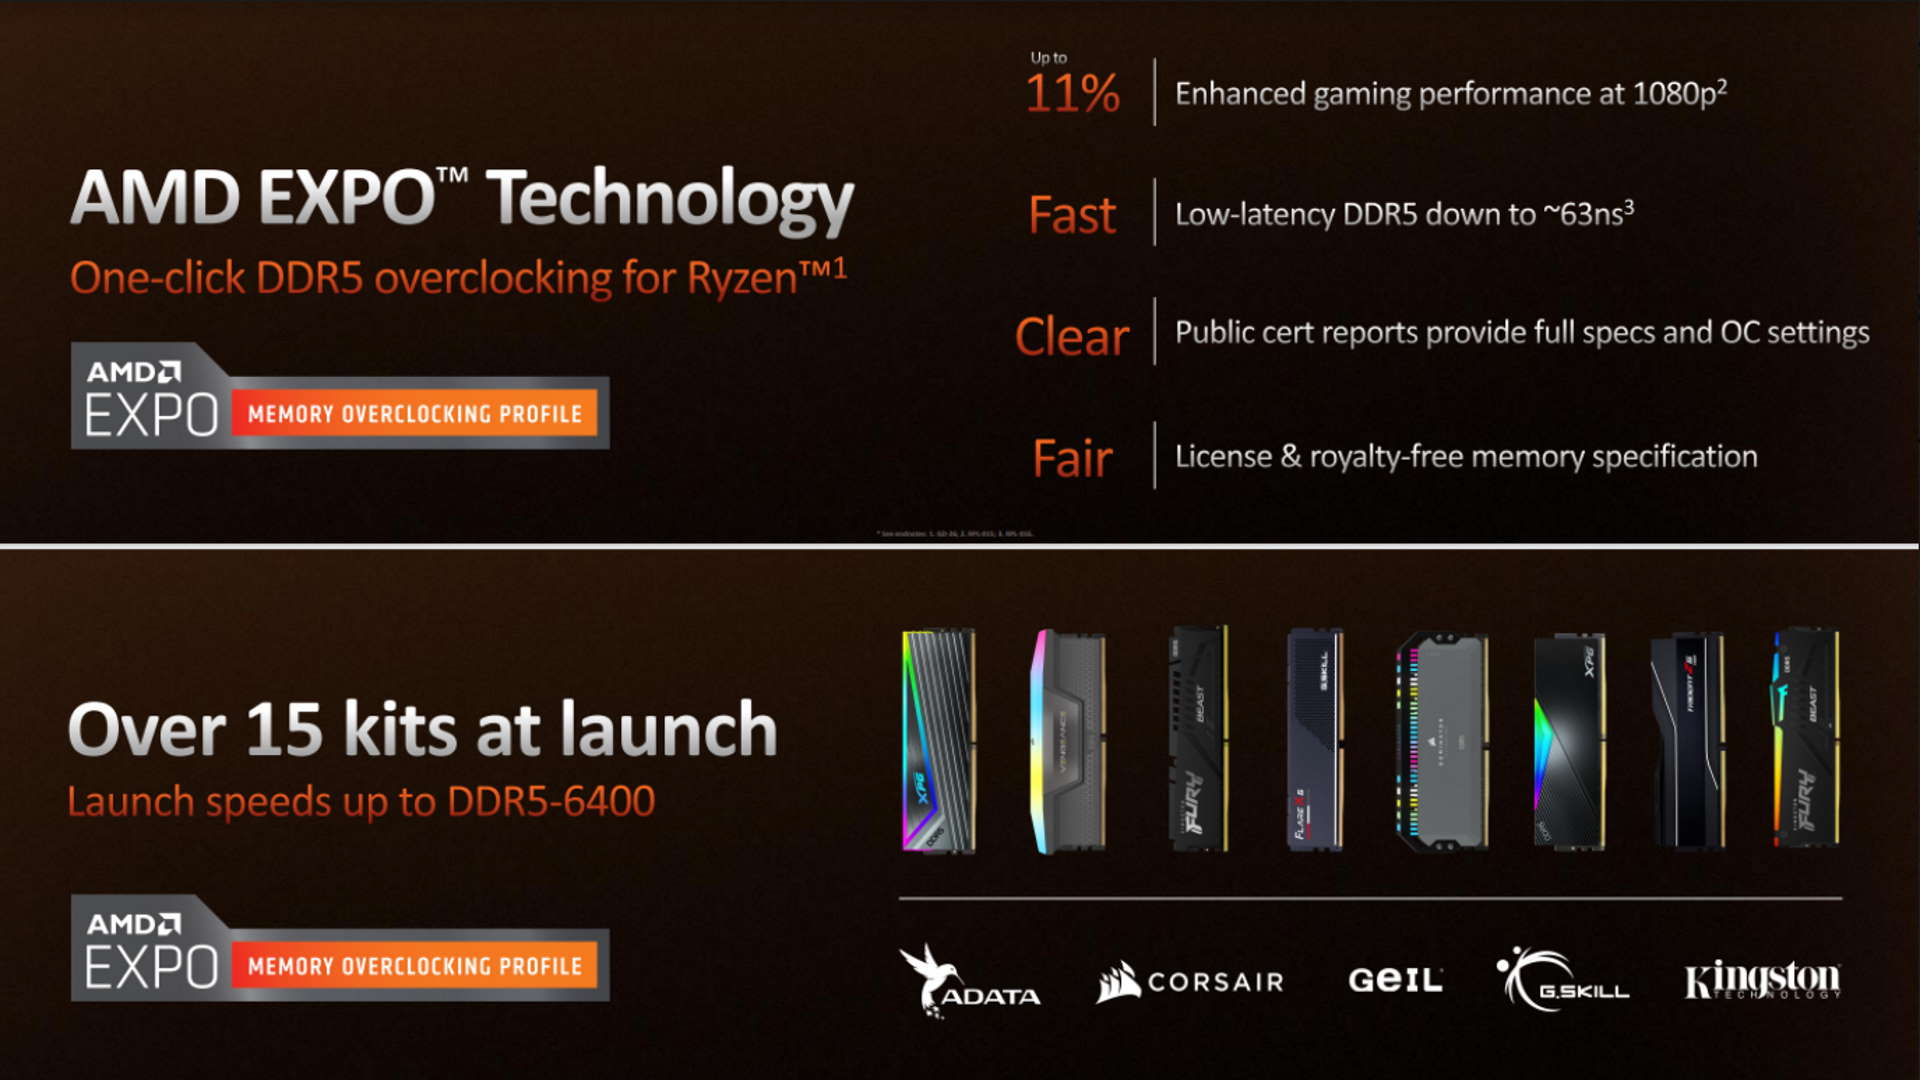 AMD EXPO memory technology